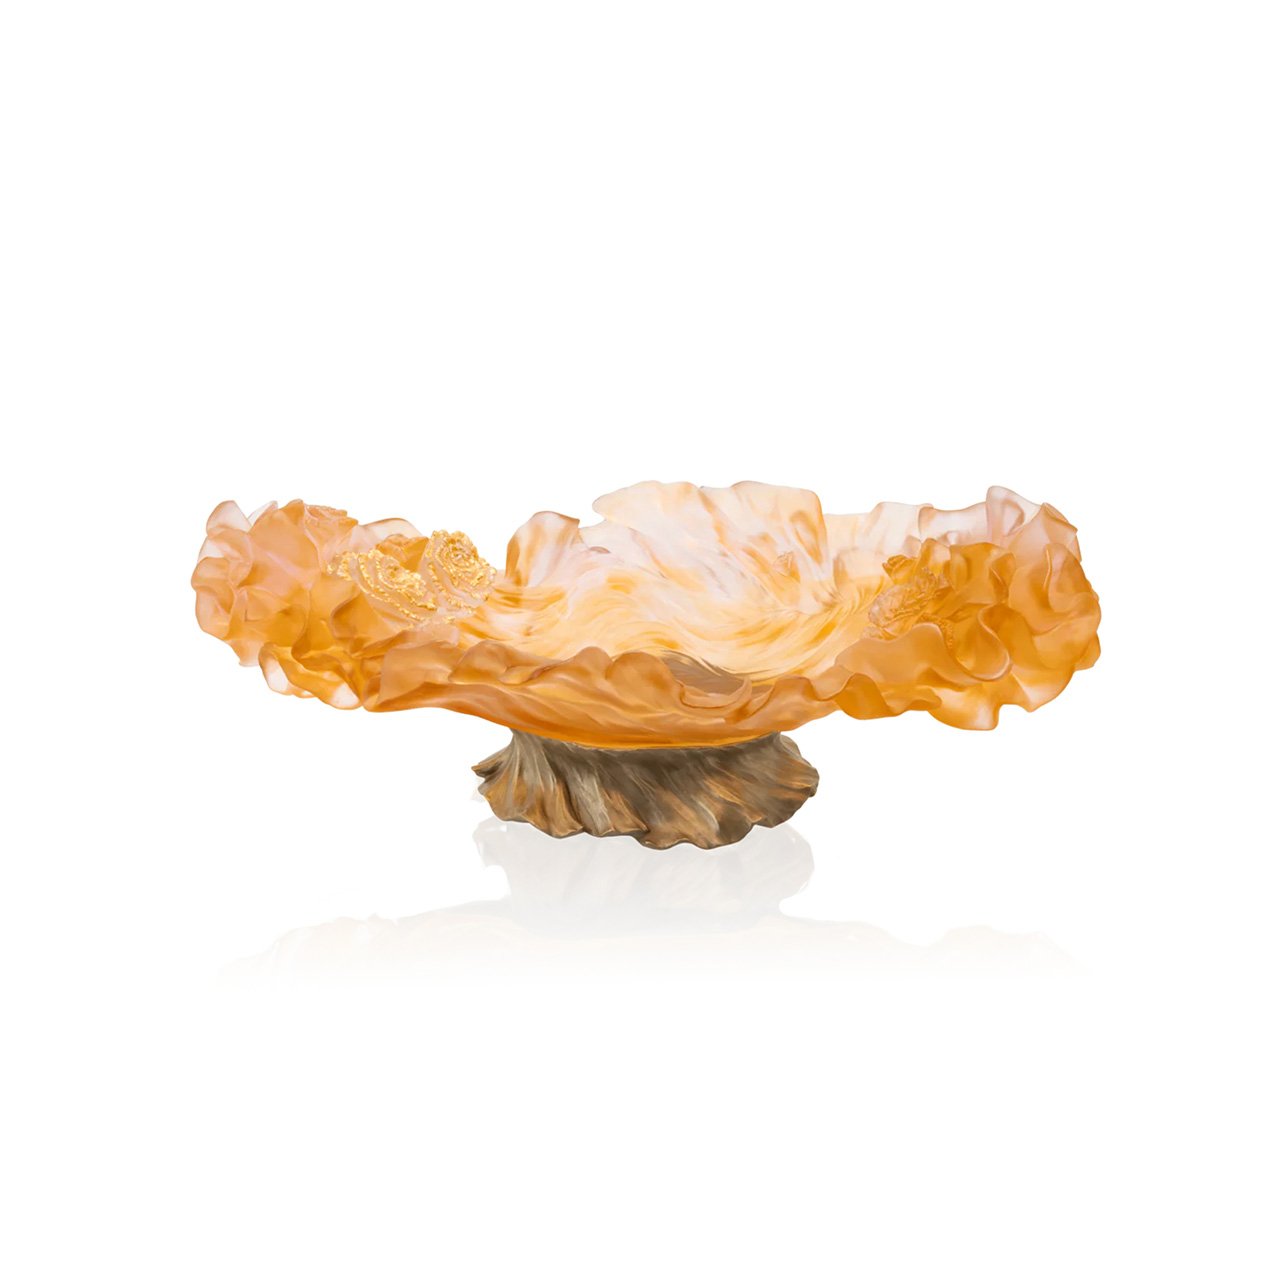 Daum Rose Royale Collection orange glass centerpiece with bronze base